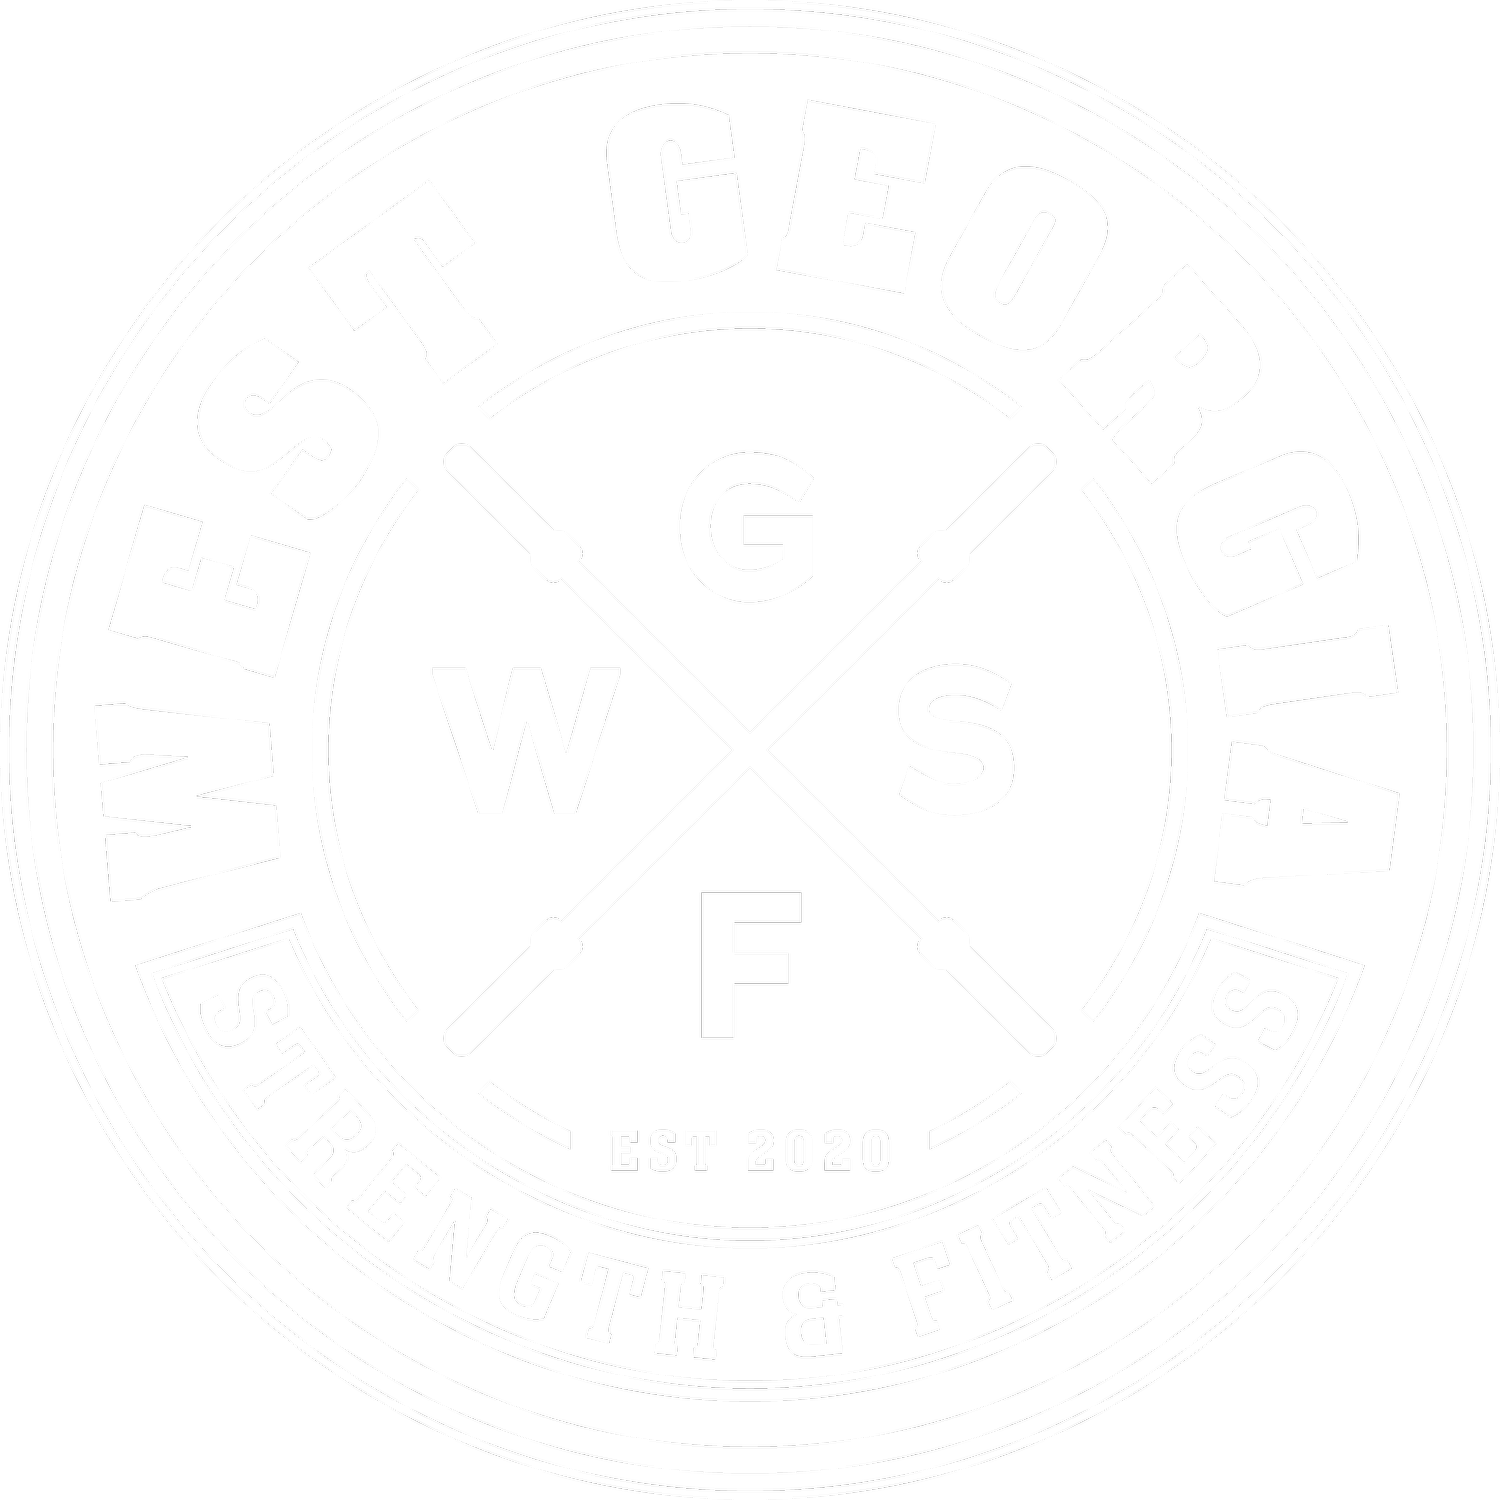 West Georgia Strength &amp; Fitness